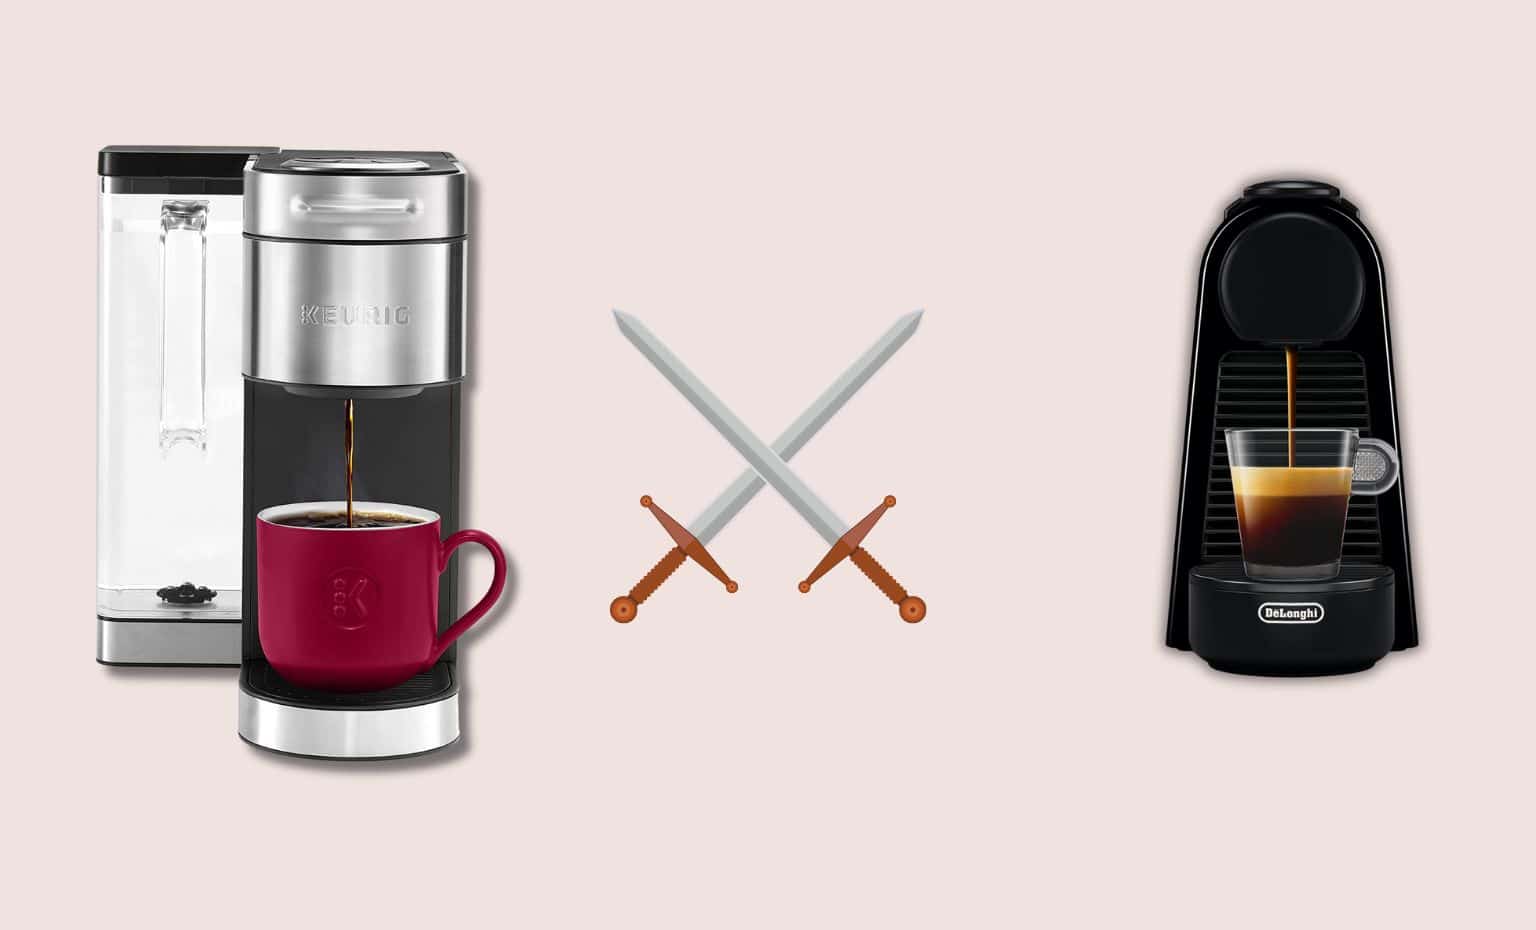 Keurig vs Nespresso, which is better